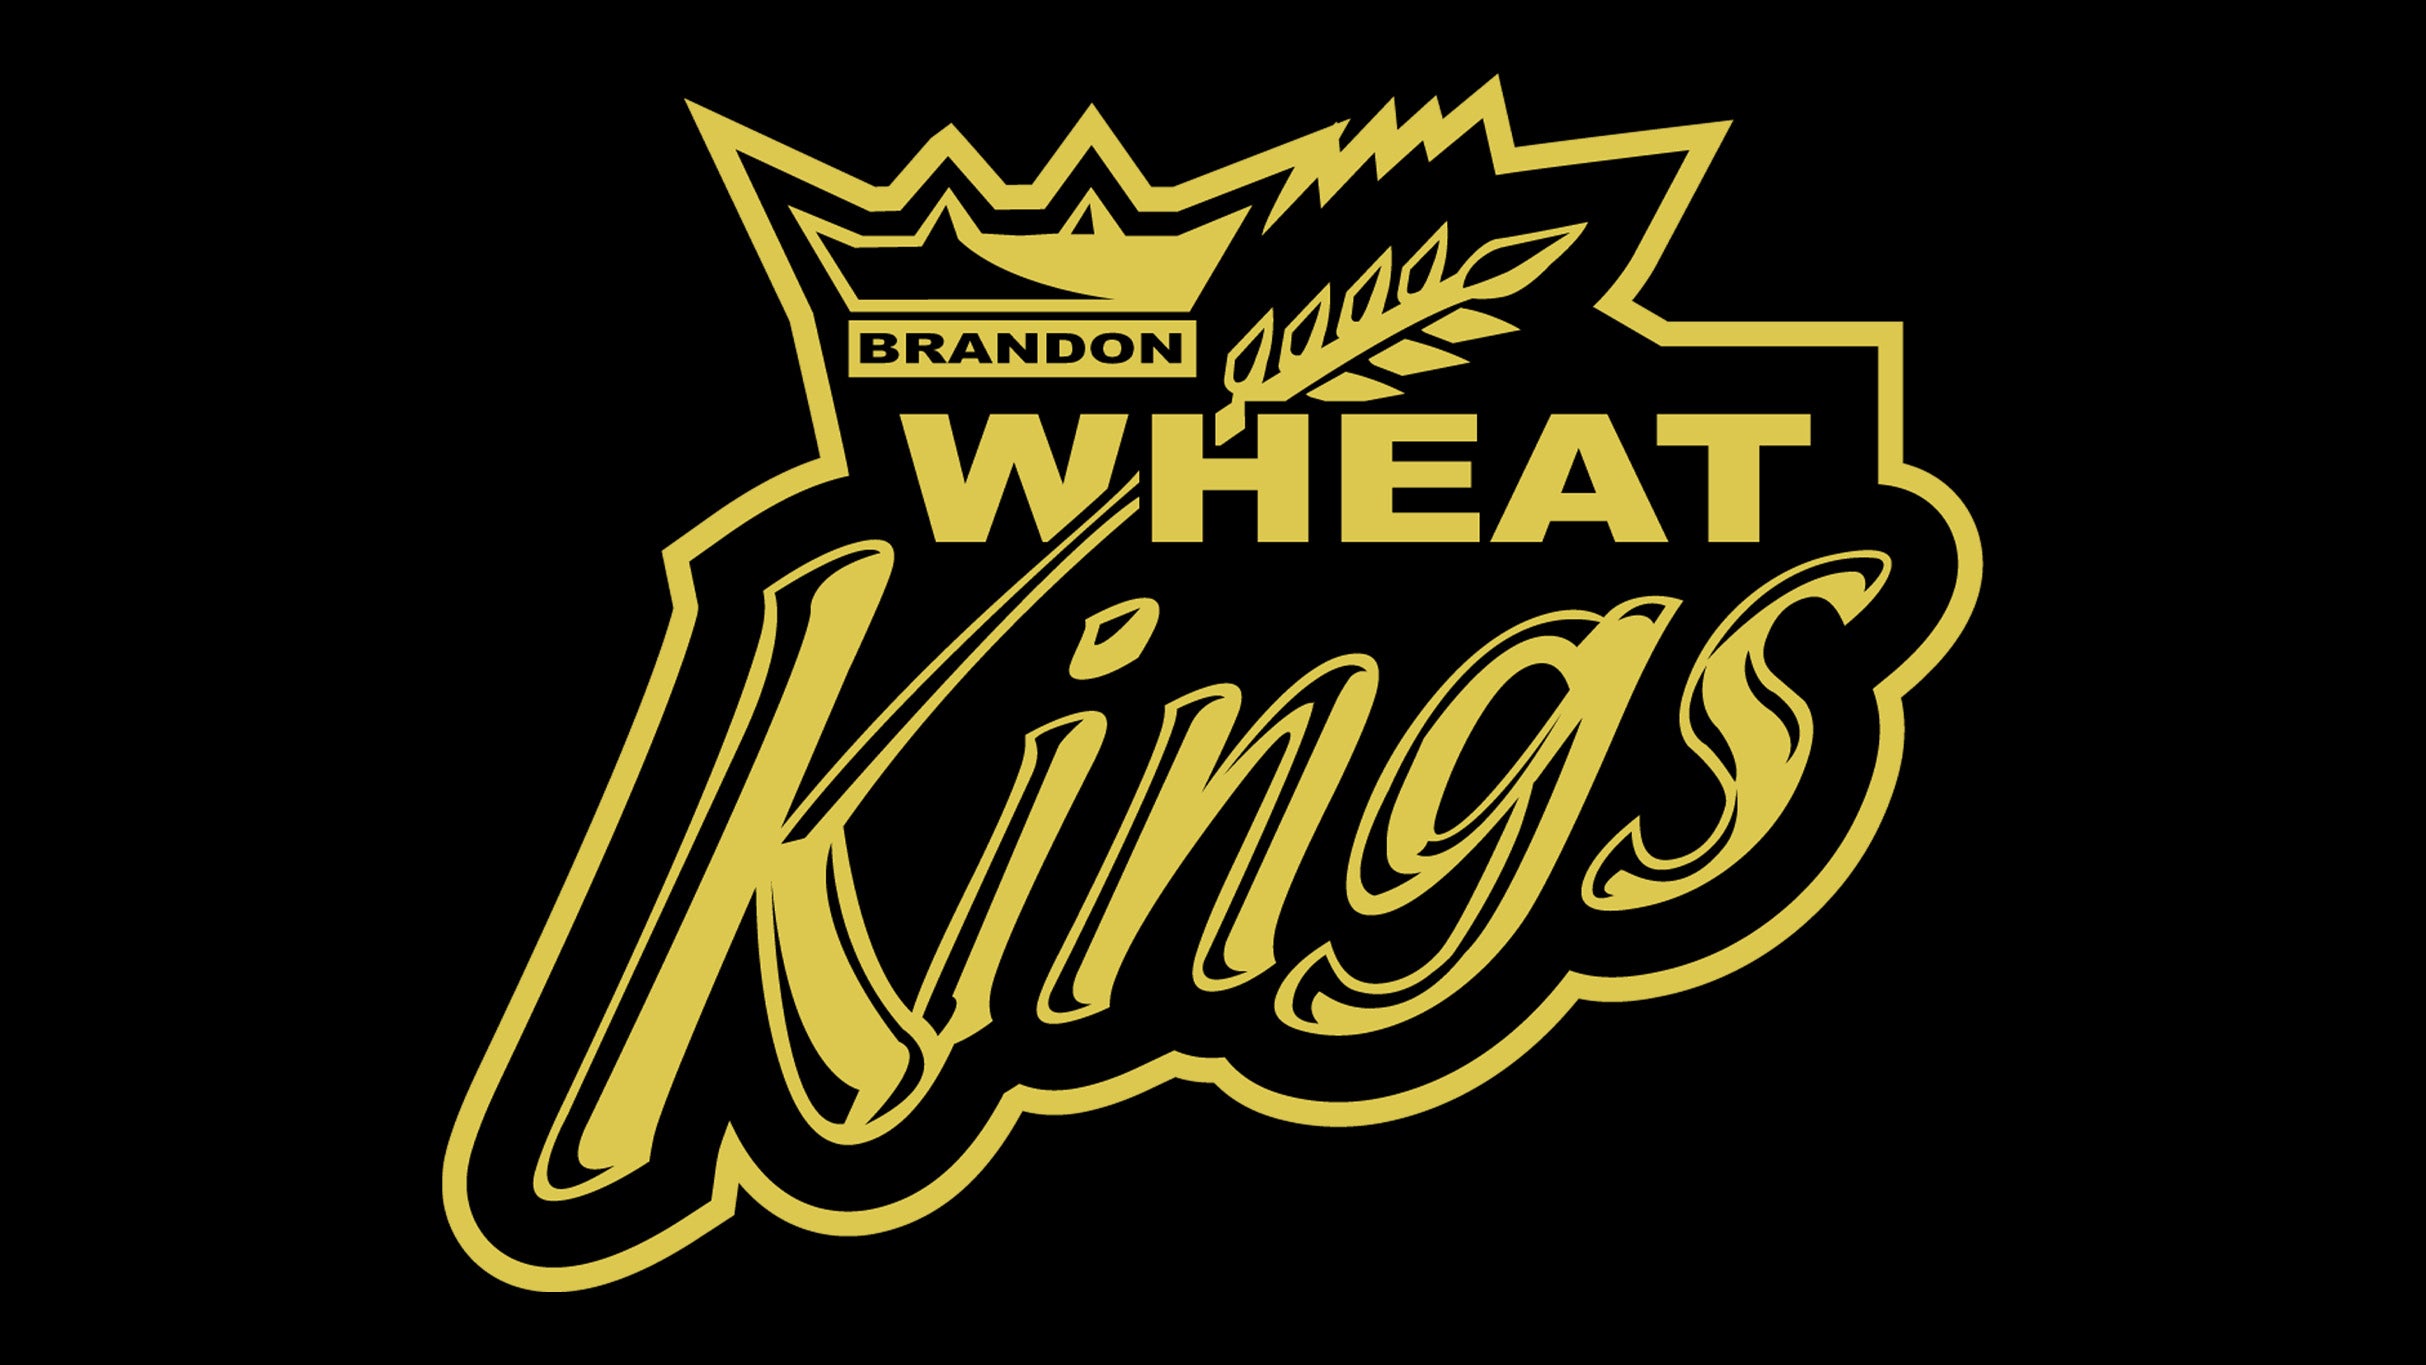 Brandon Wheat Kings vs. Prince Albert Raiders in Brandon promo photo for Military  presale offer code